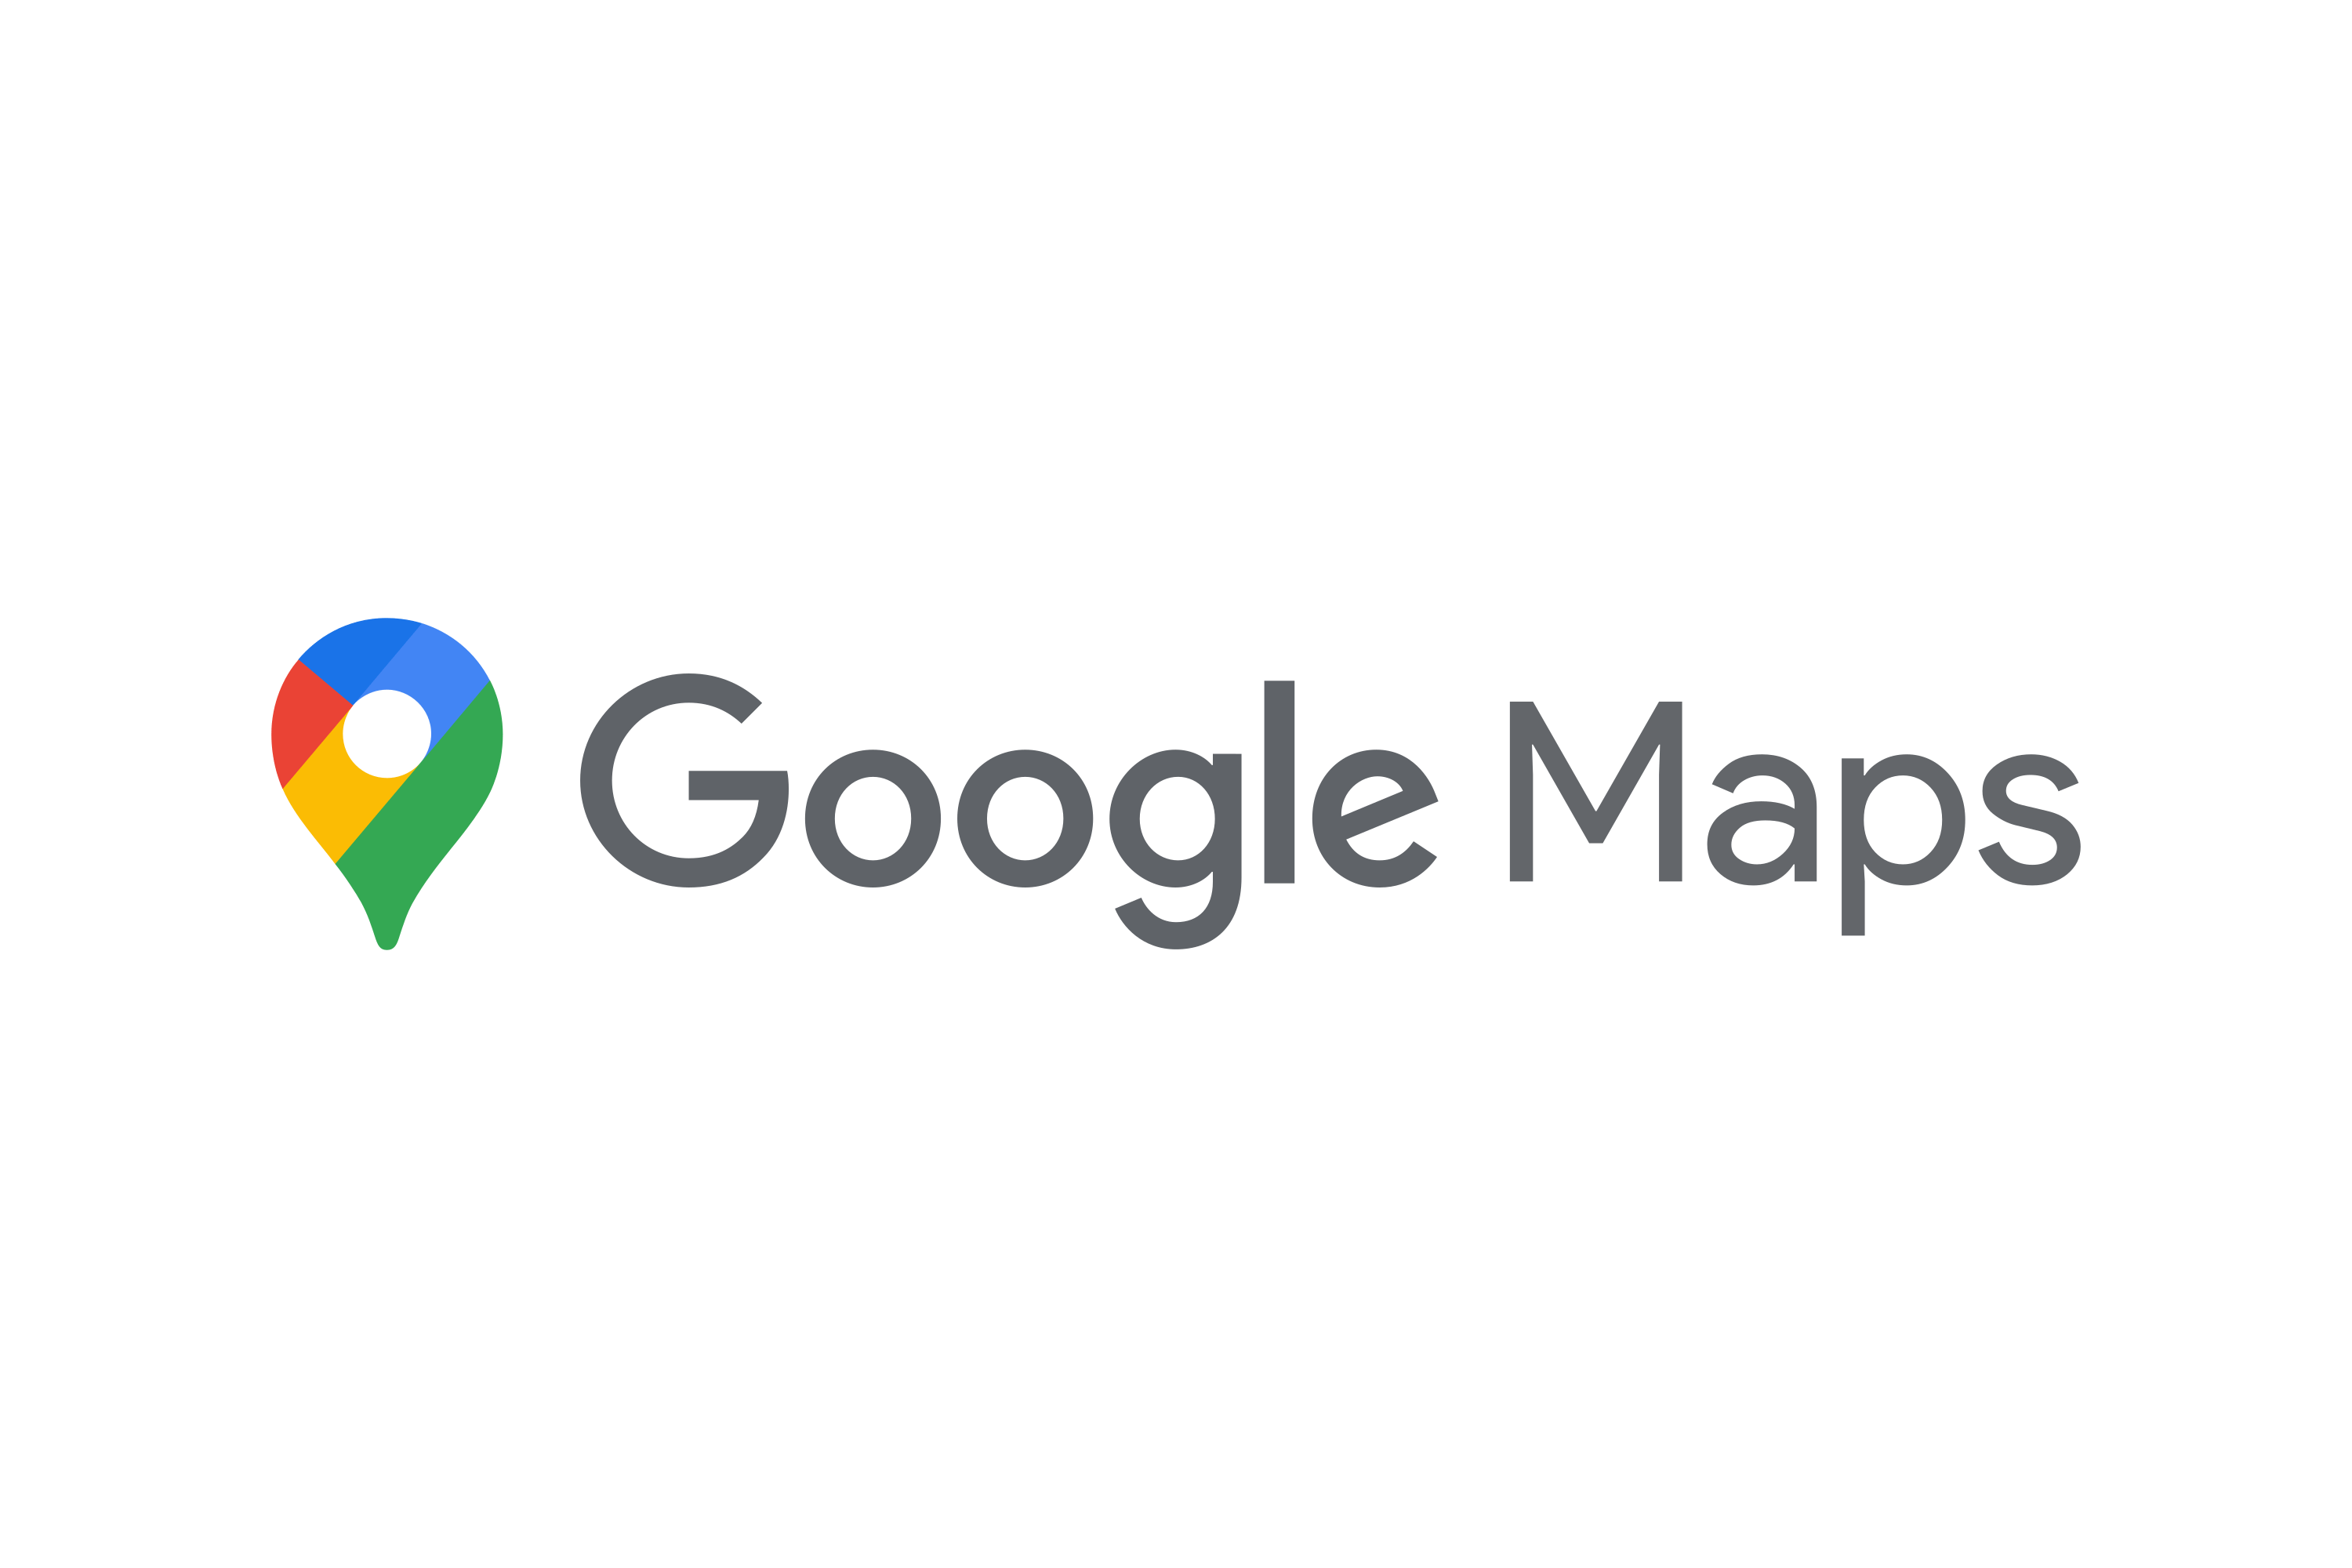 Google Maps Transparent Logo PNG